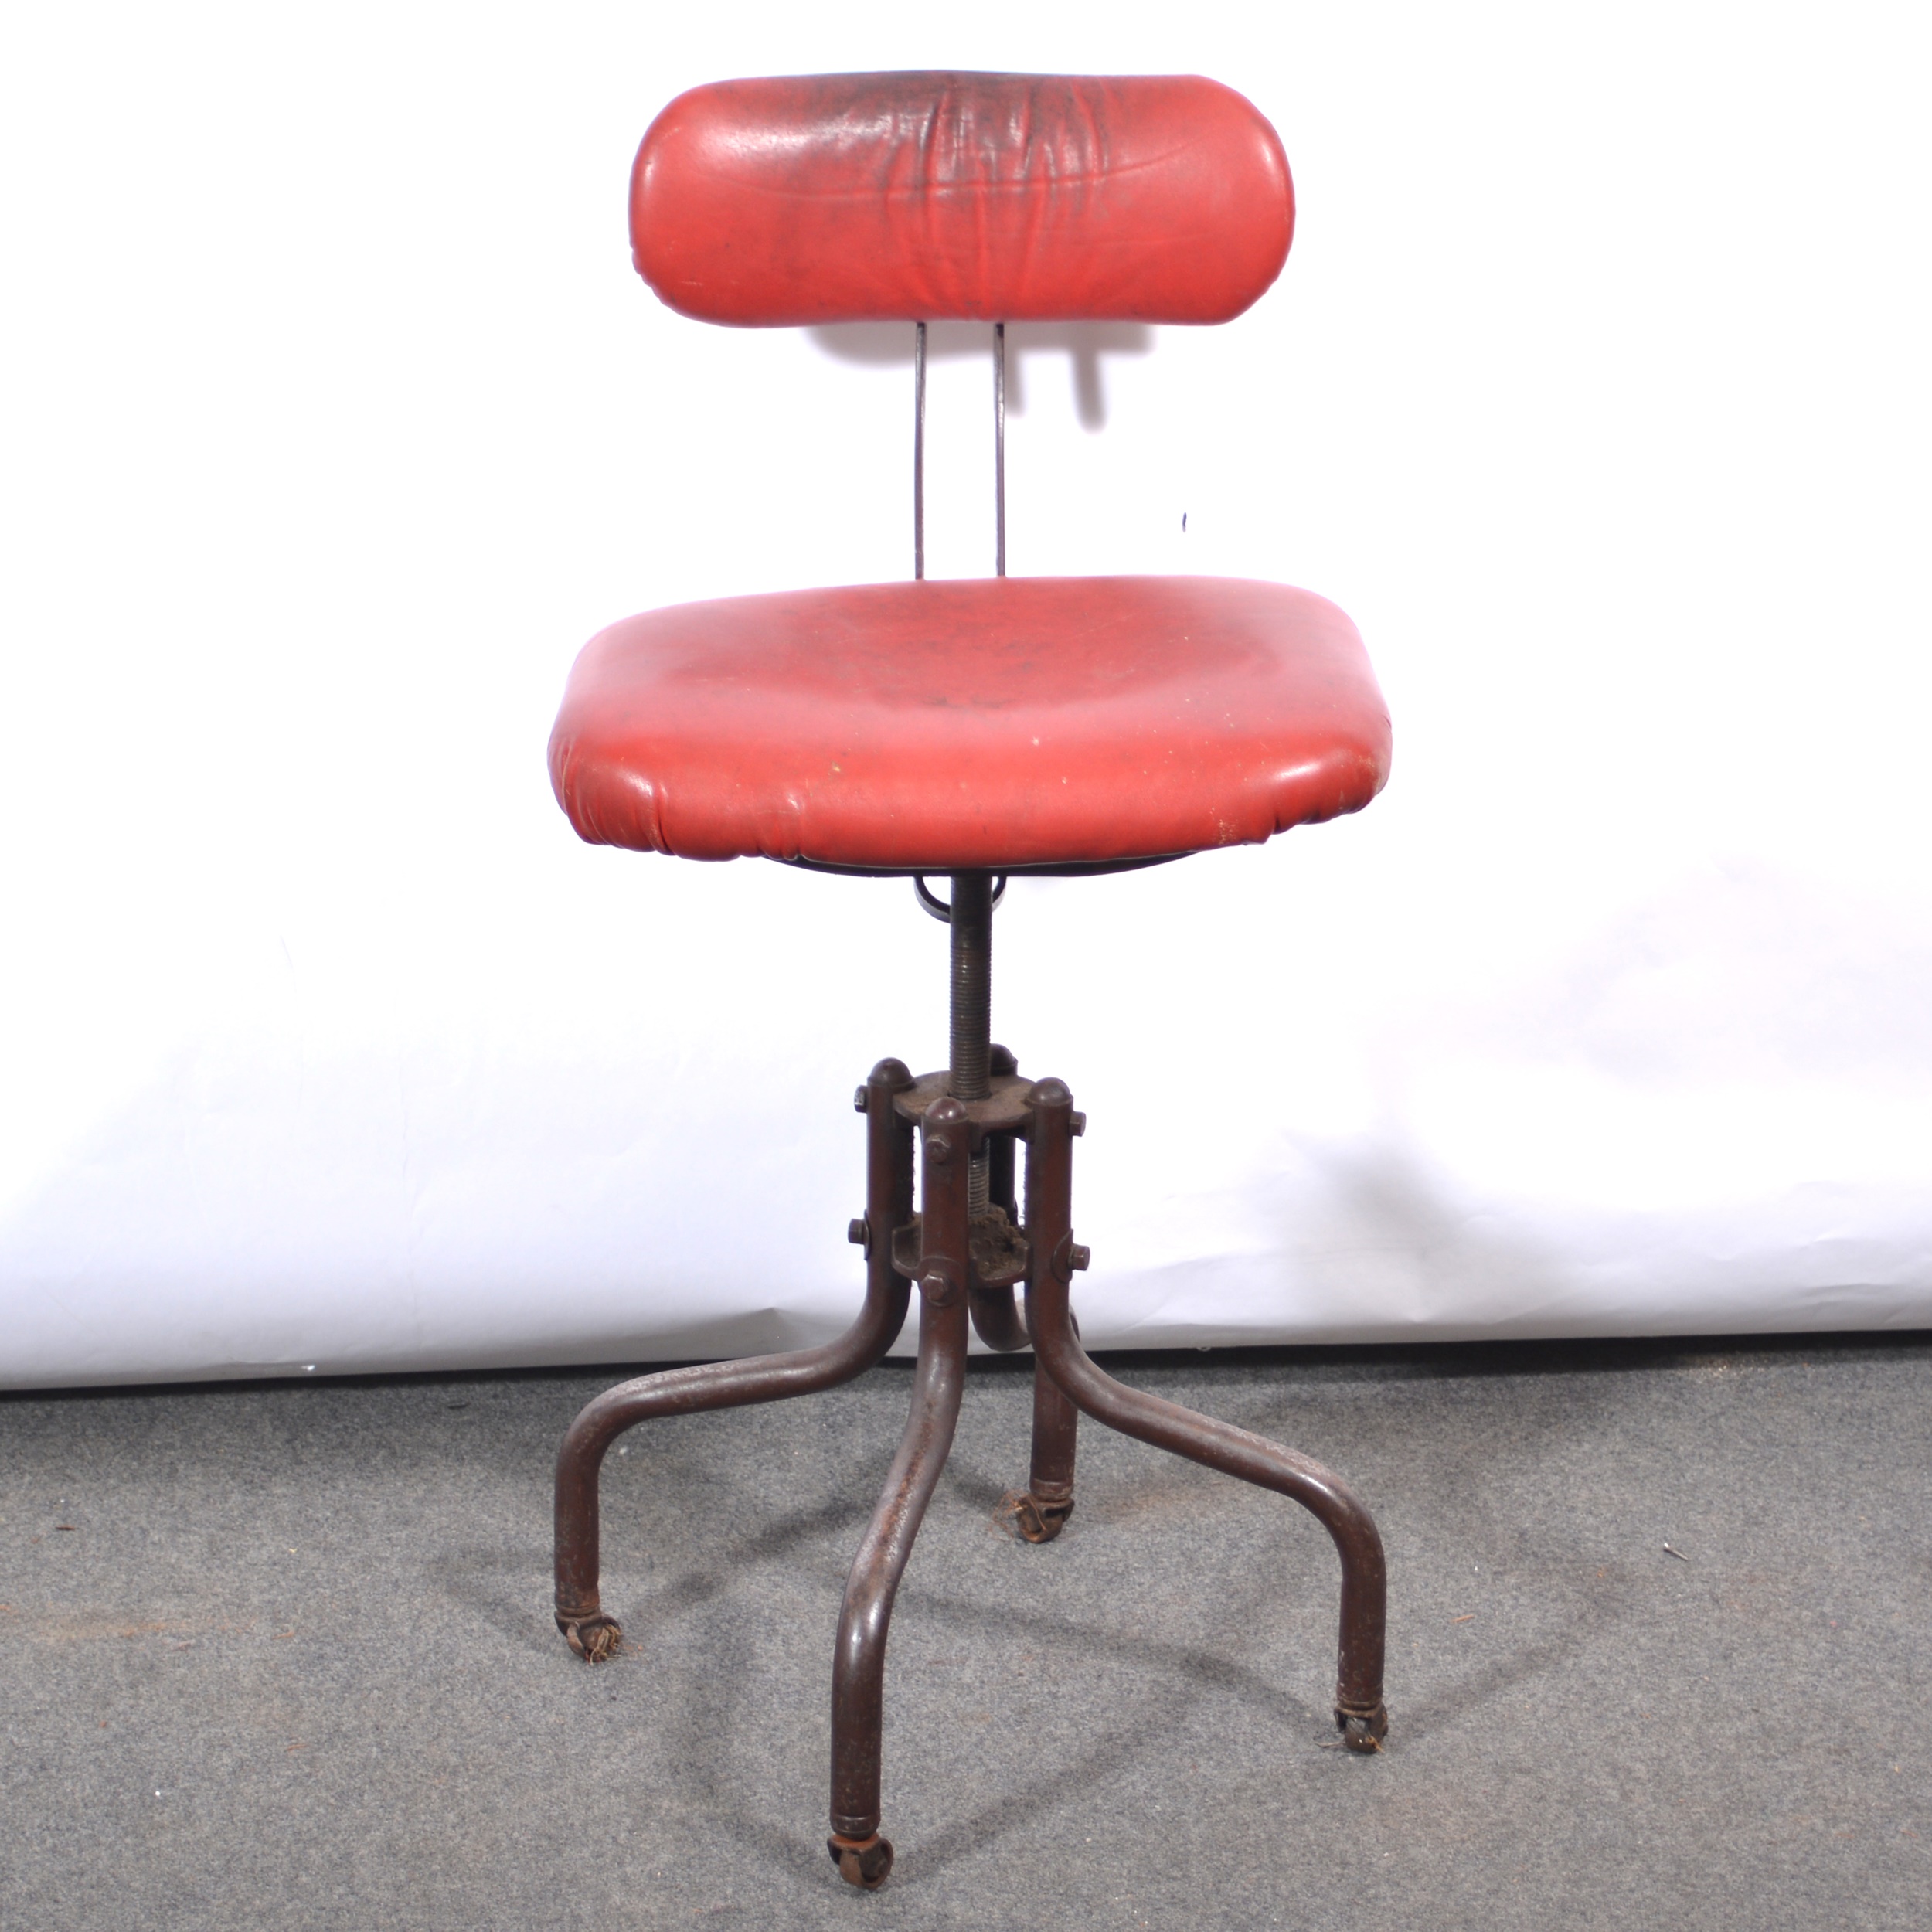 Industrial Machinist's chair